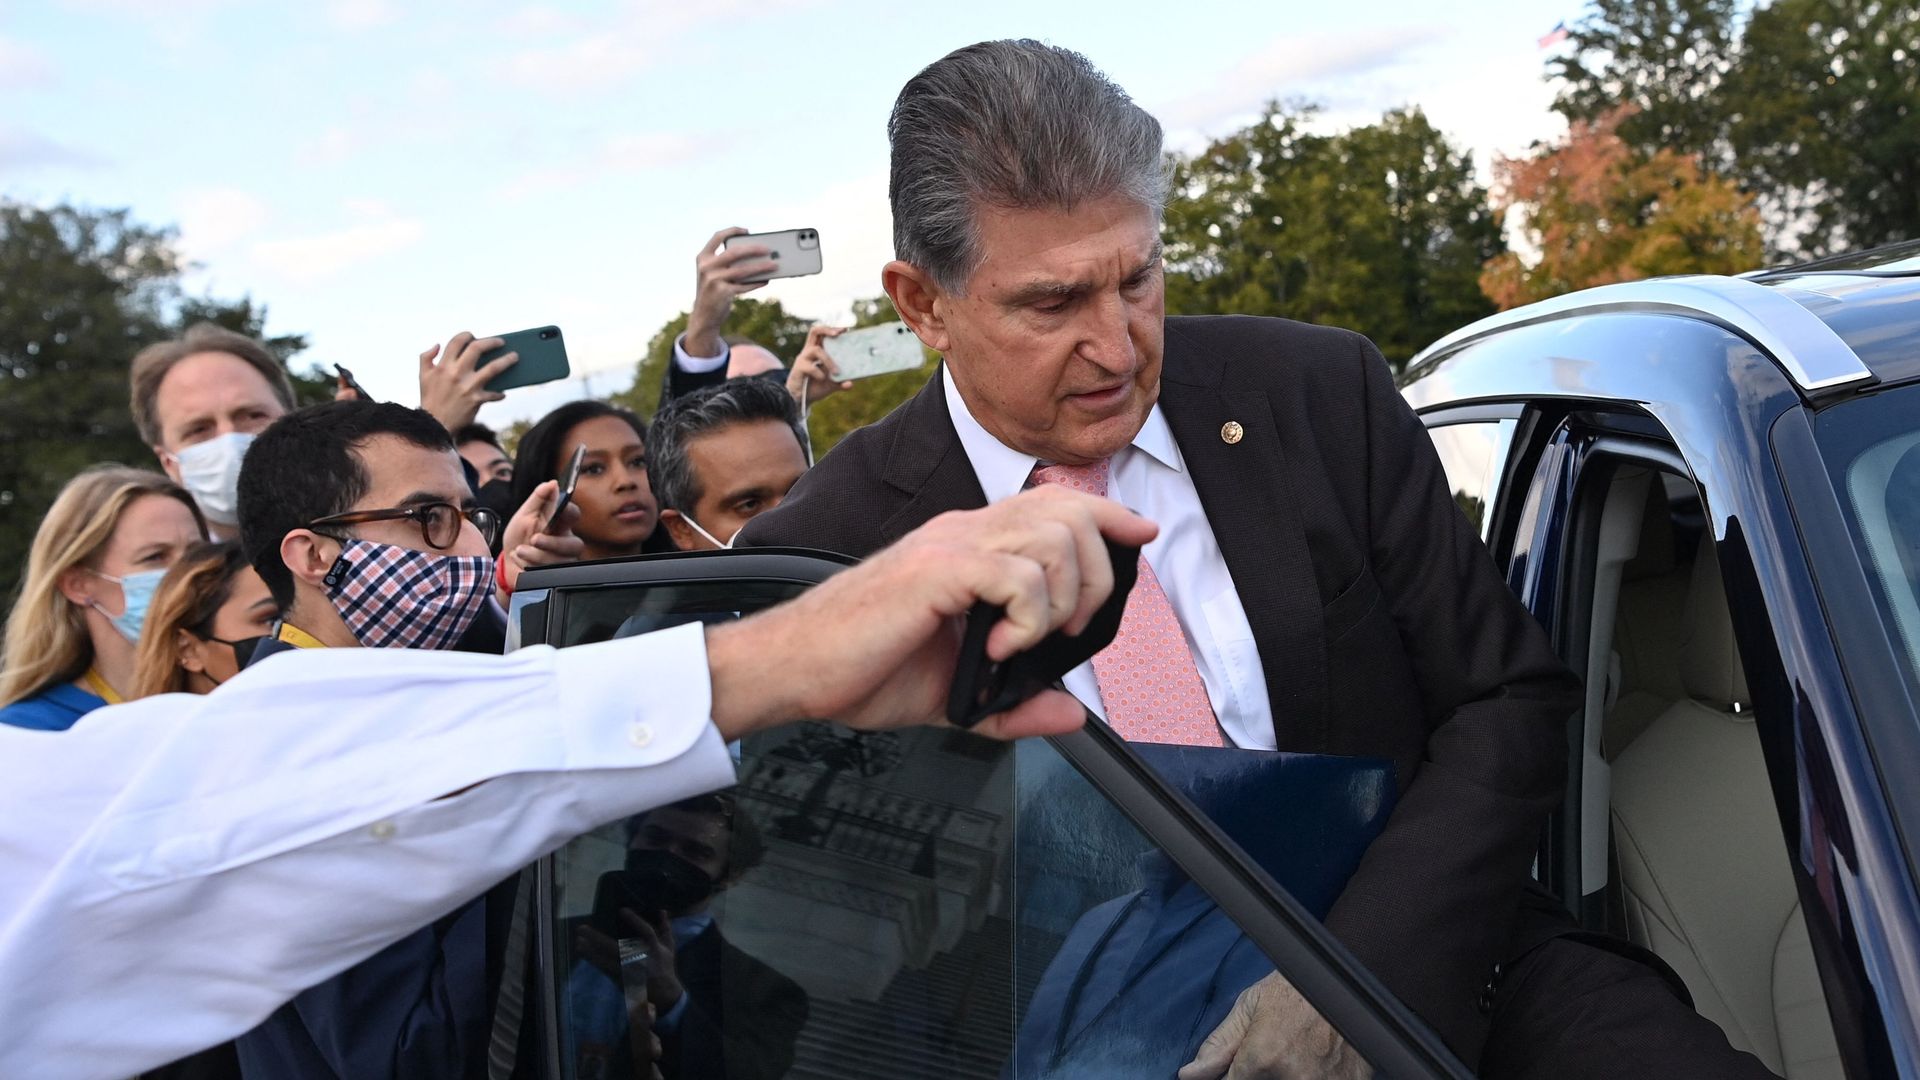 Reporters are seen surrounding Sen. Joe Manchin as he enters a car on Thursday.